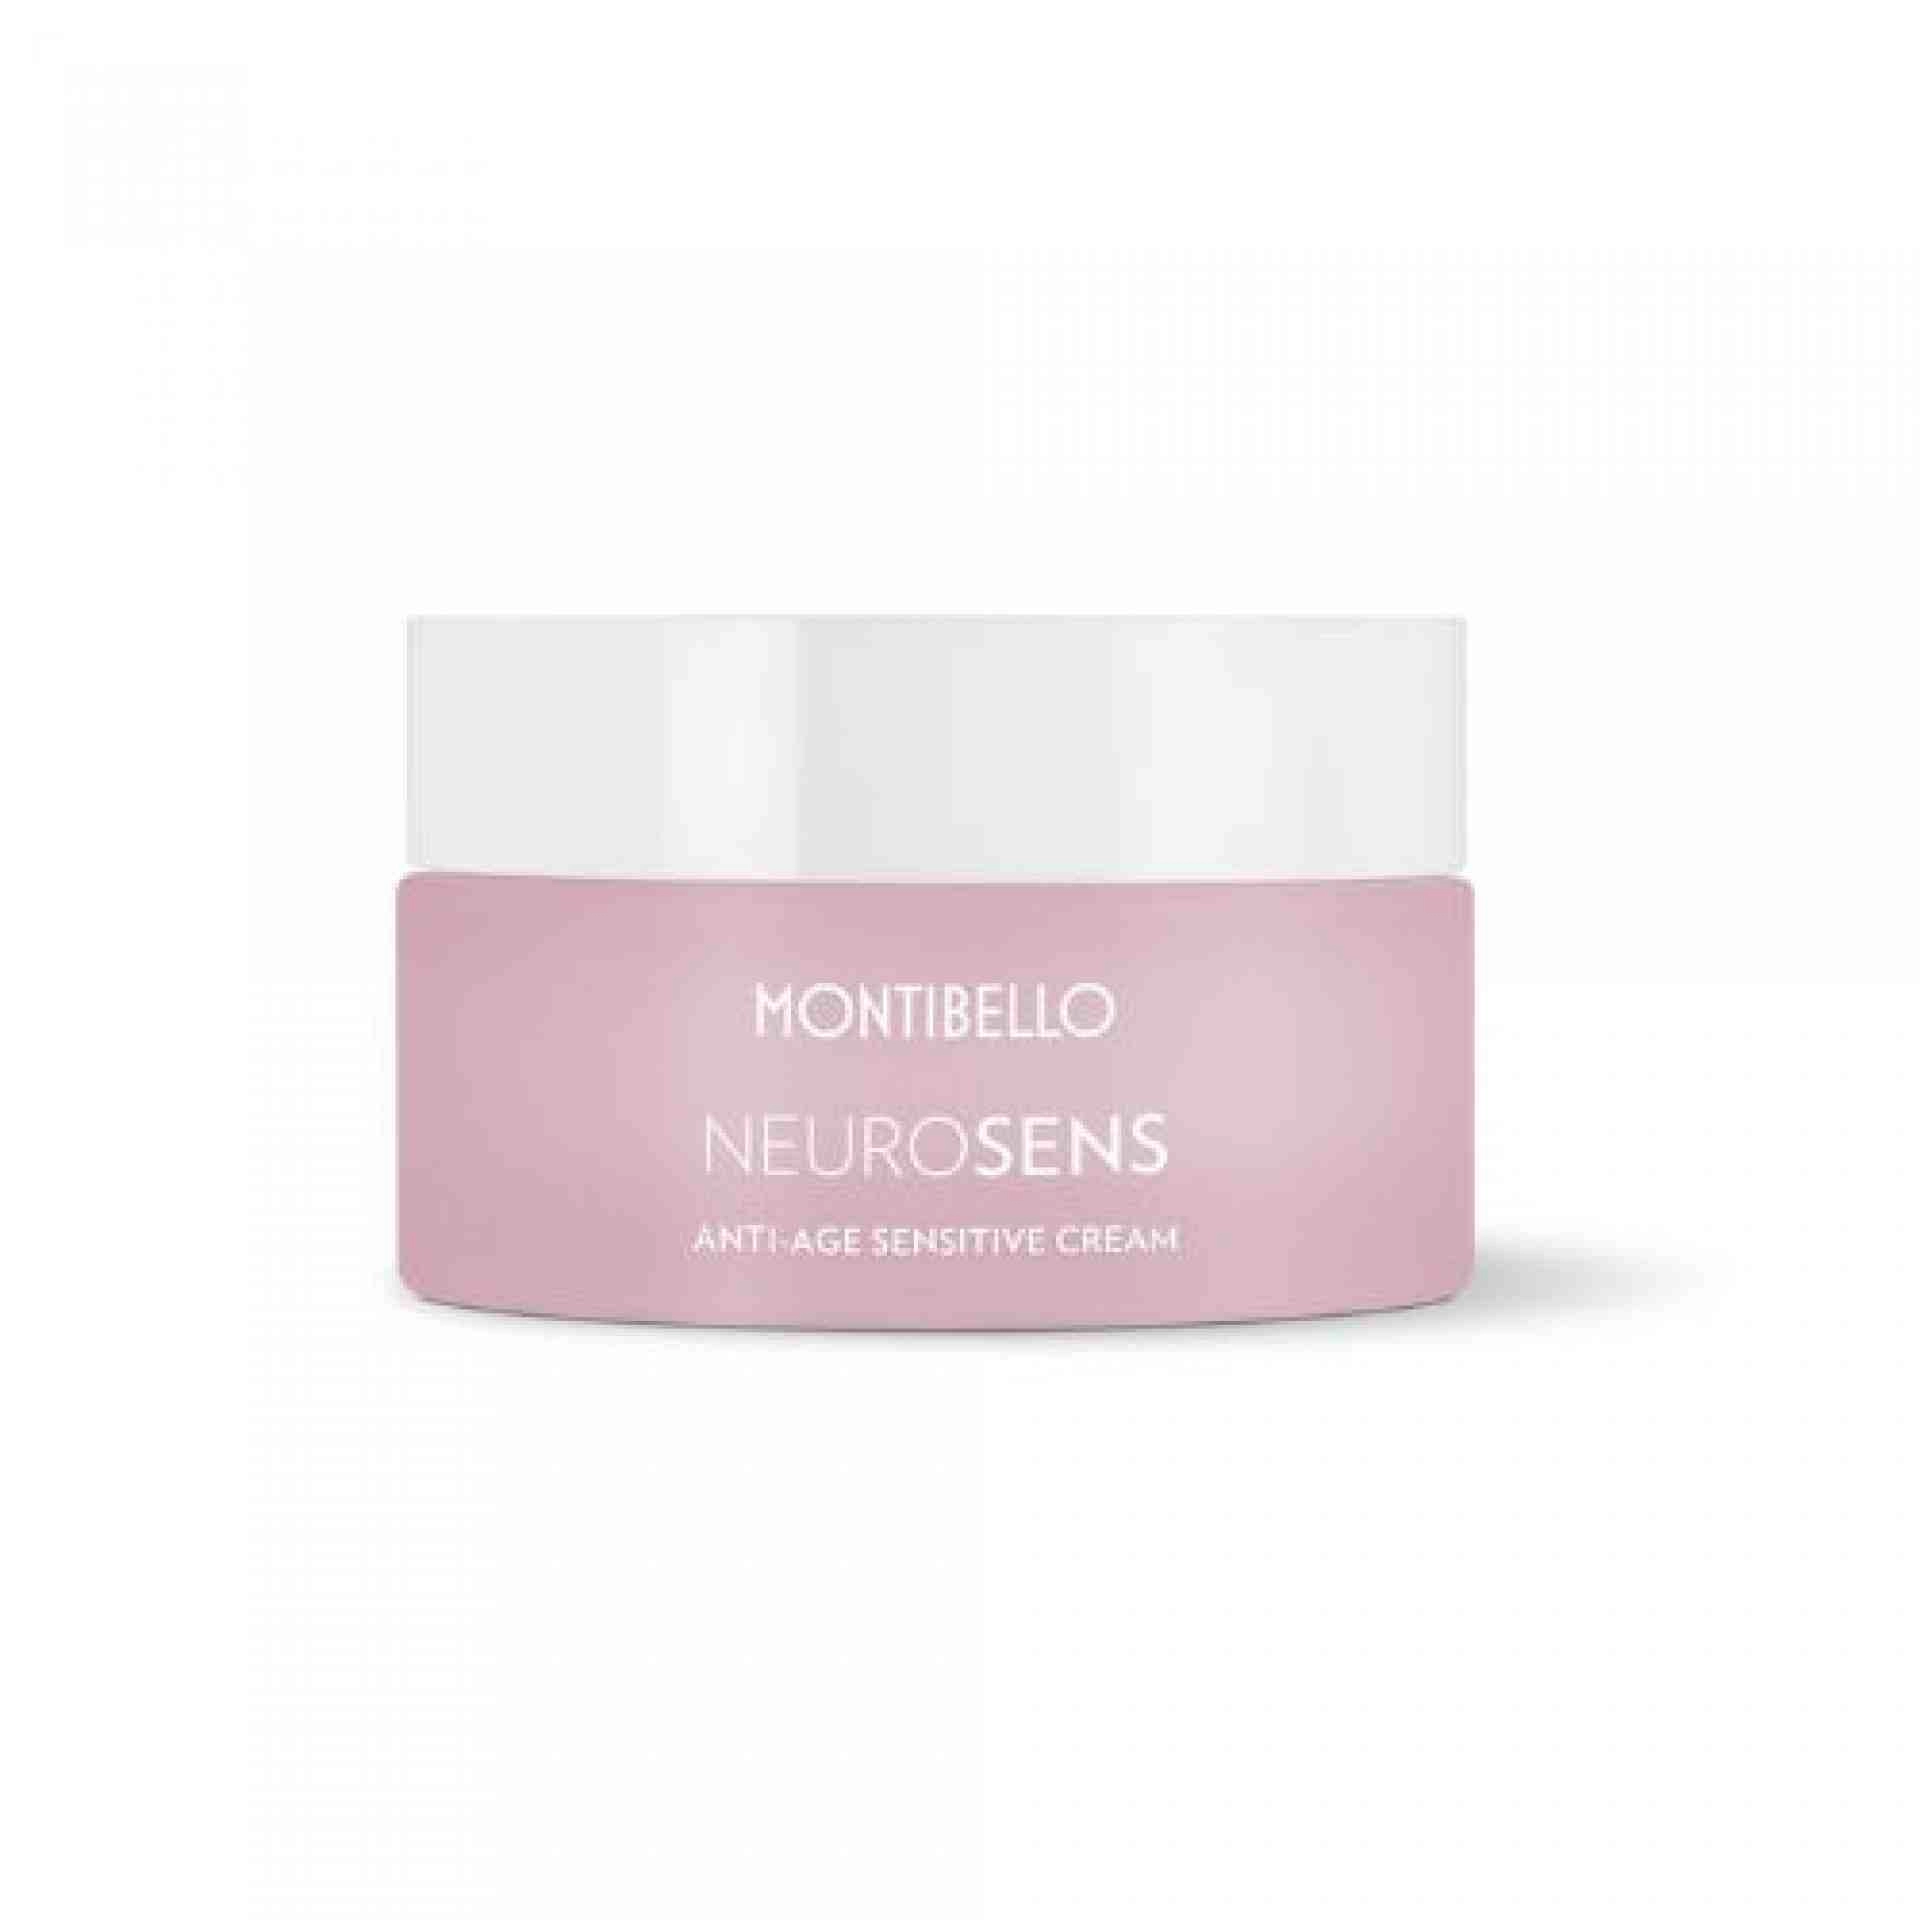 Anti-age sensitive cream | Crema Antiedad 50ml - Neurosens - Montibello ®